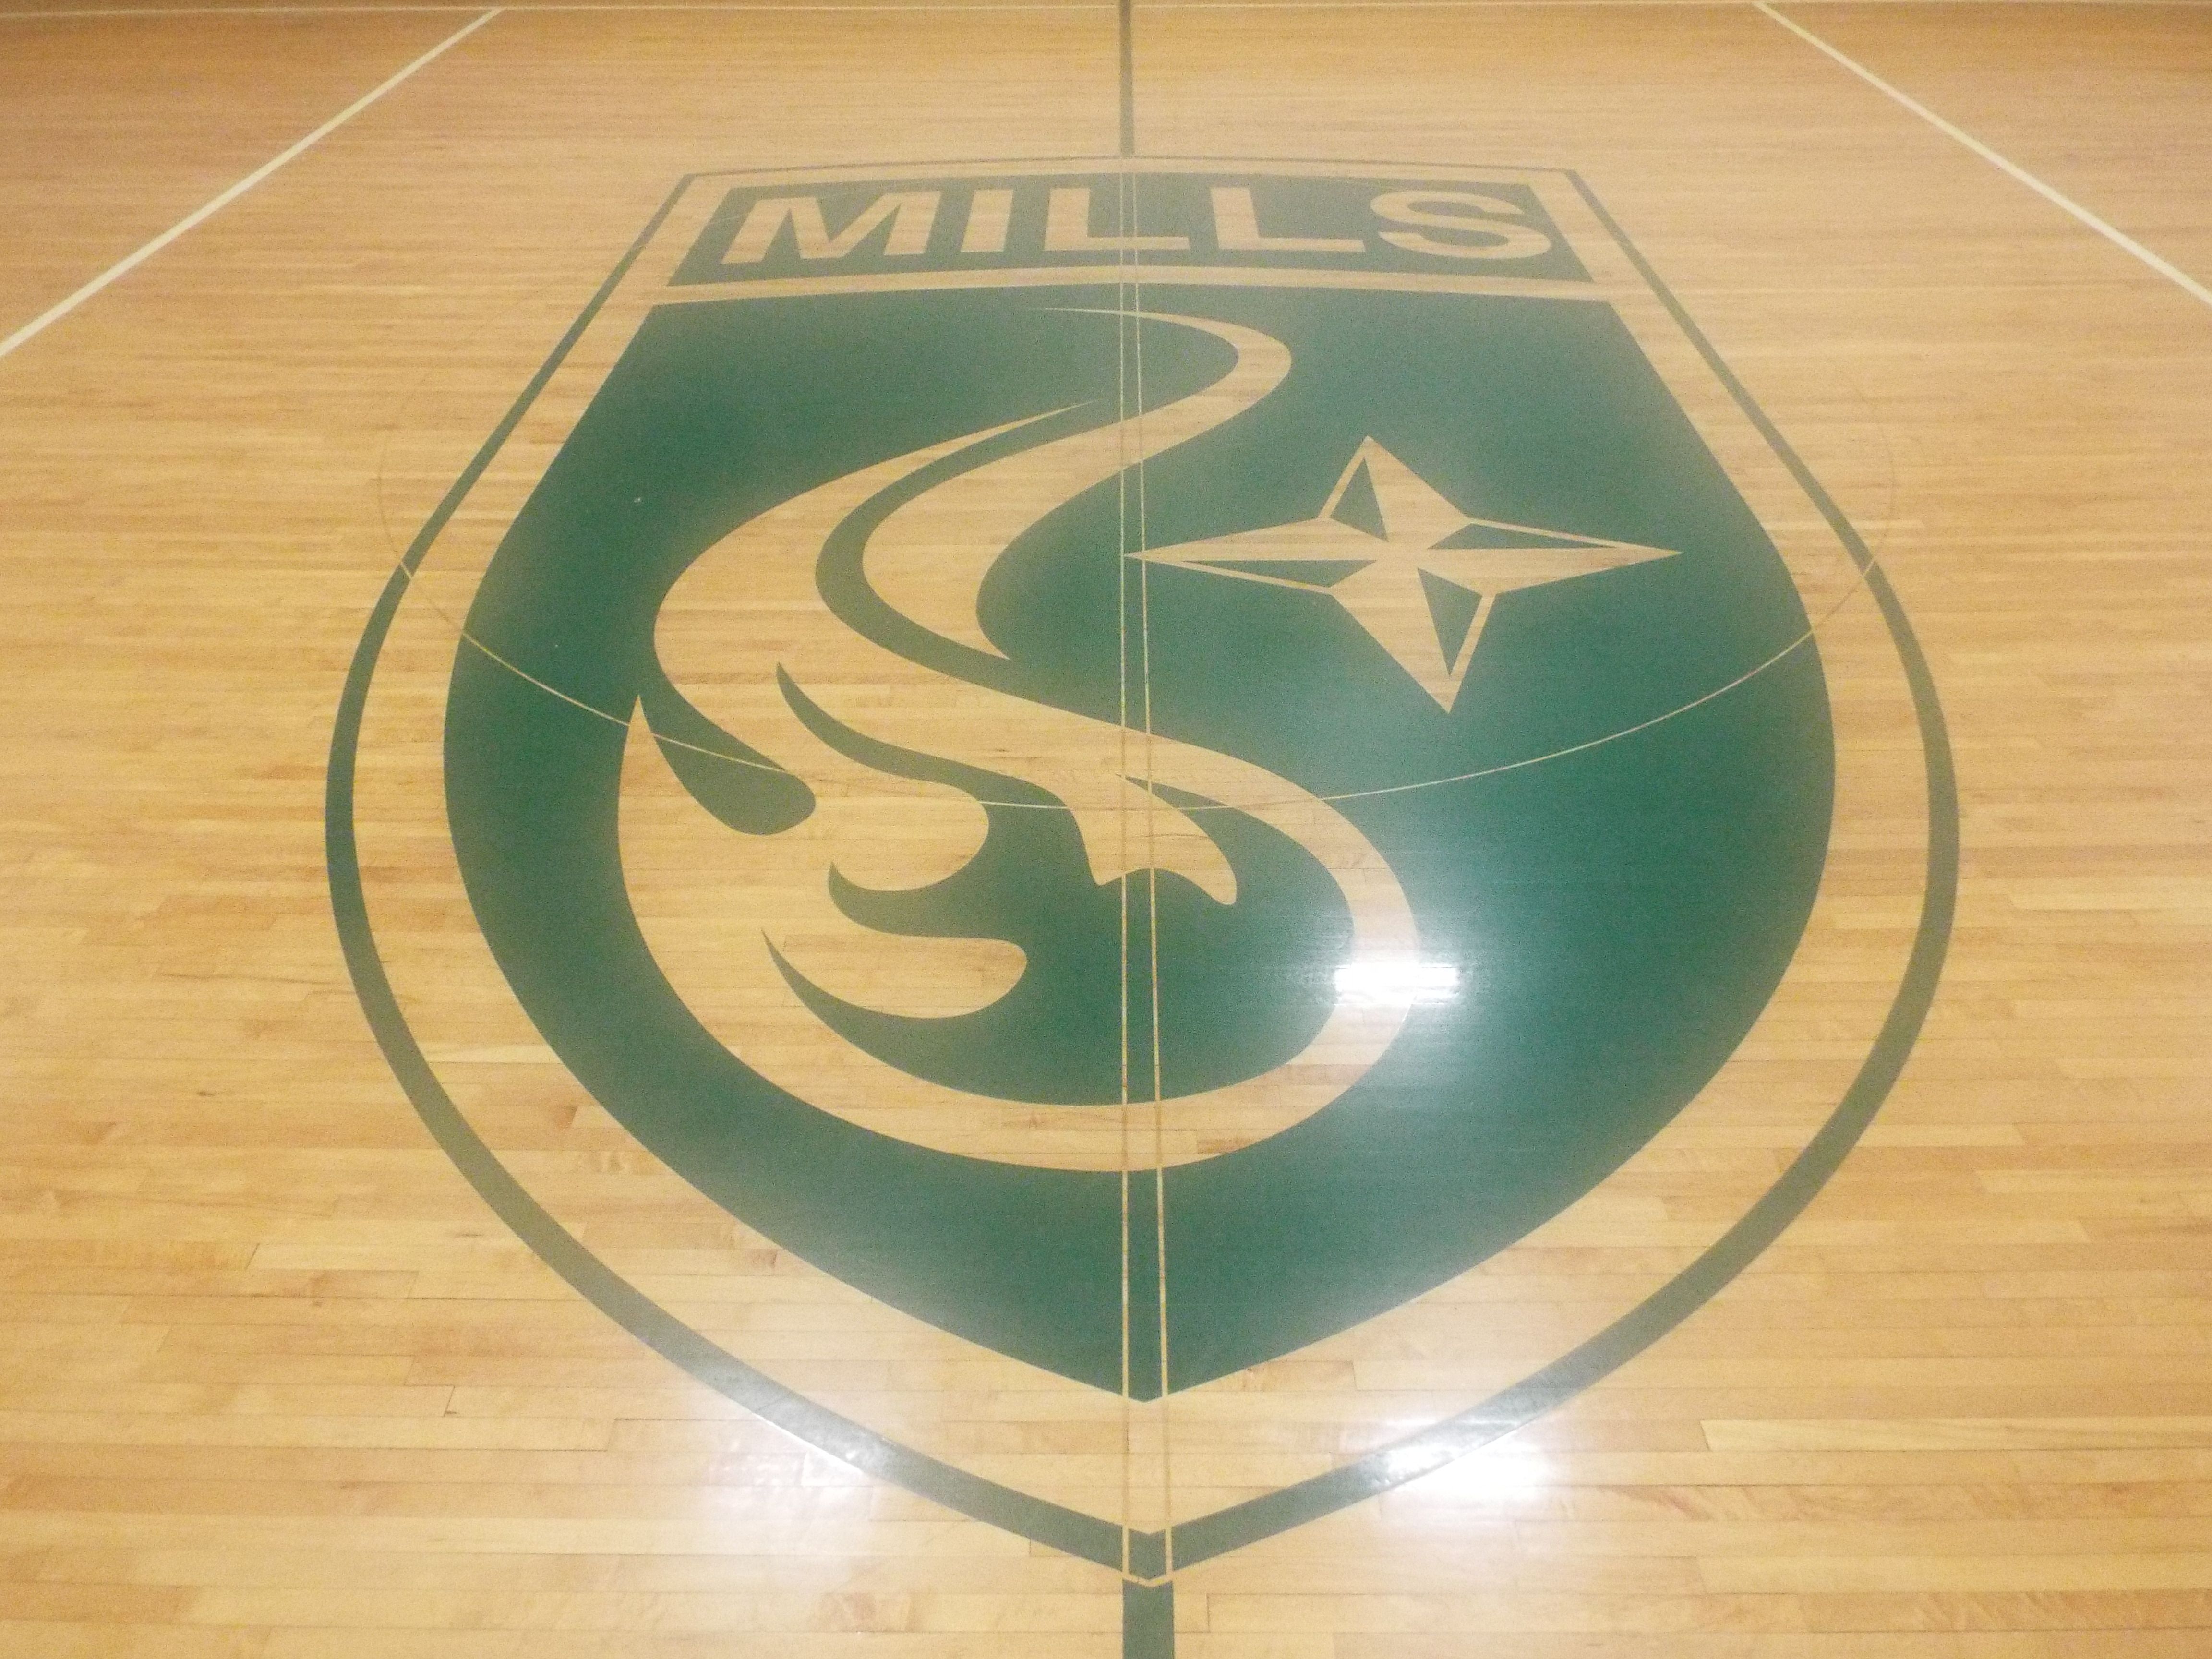 Mills Middle School